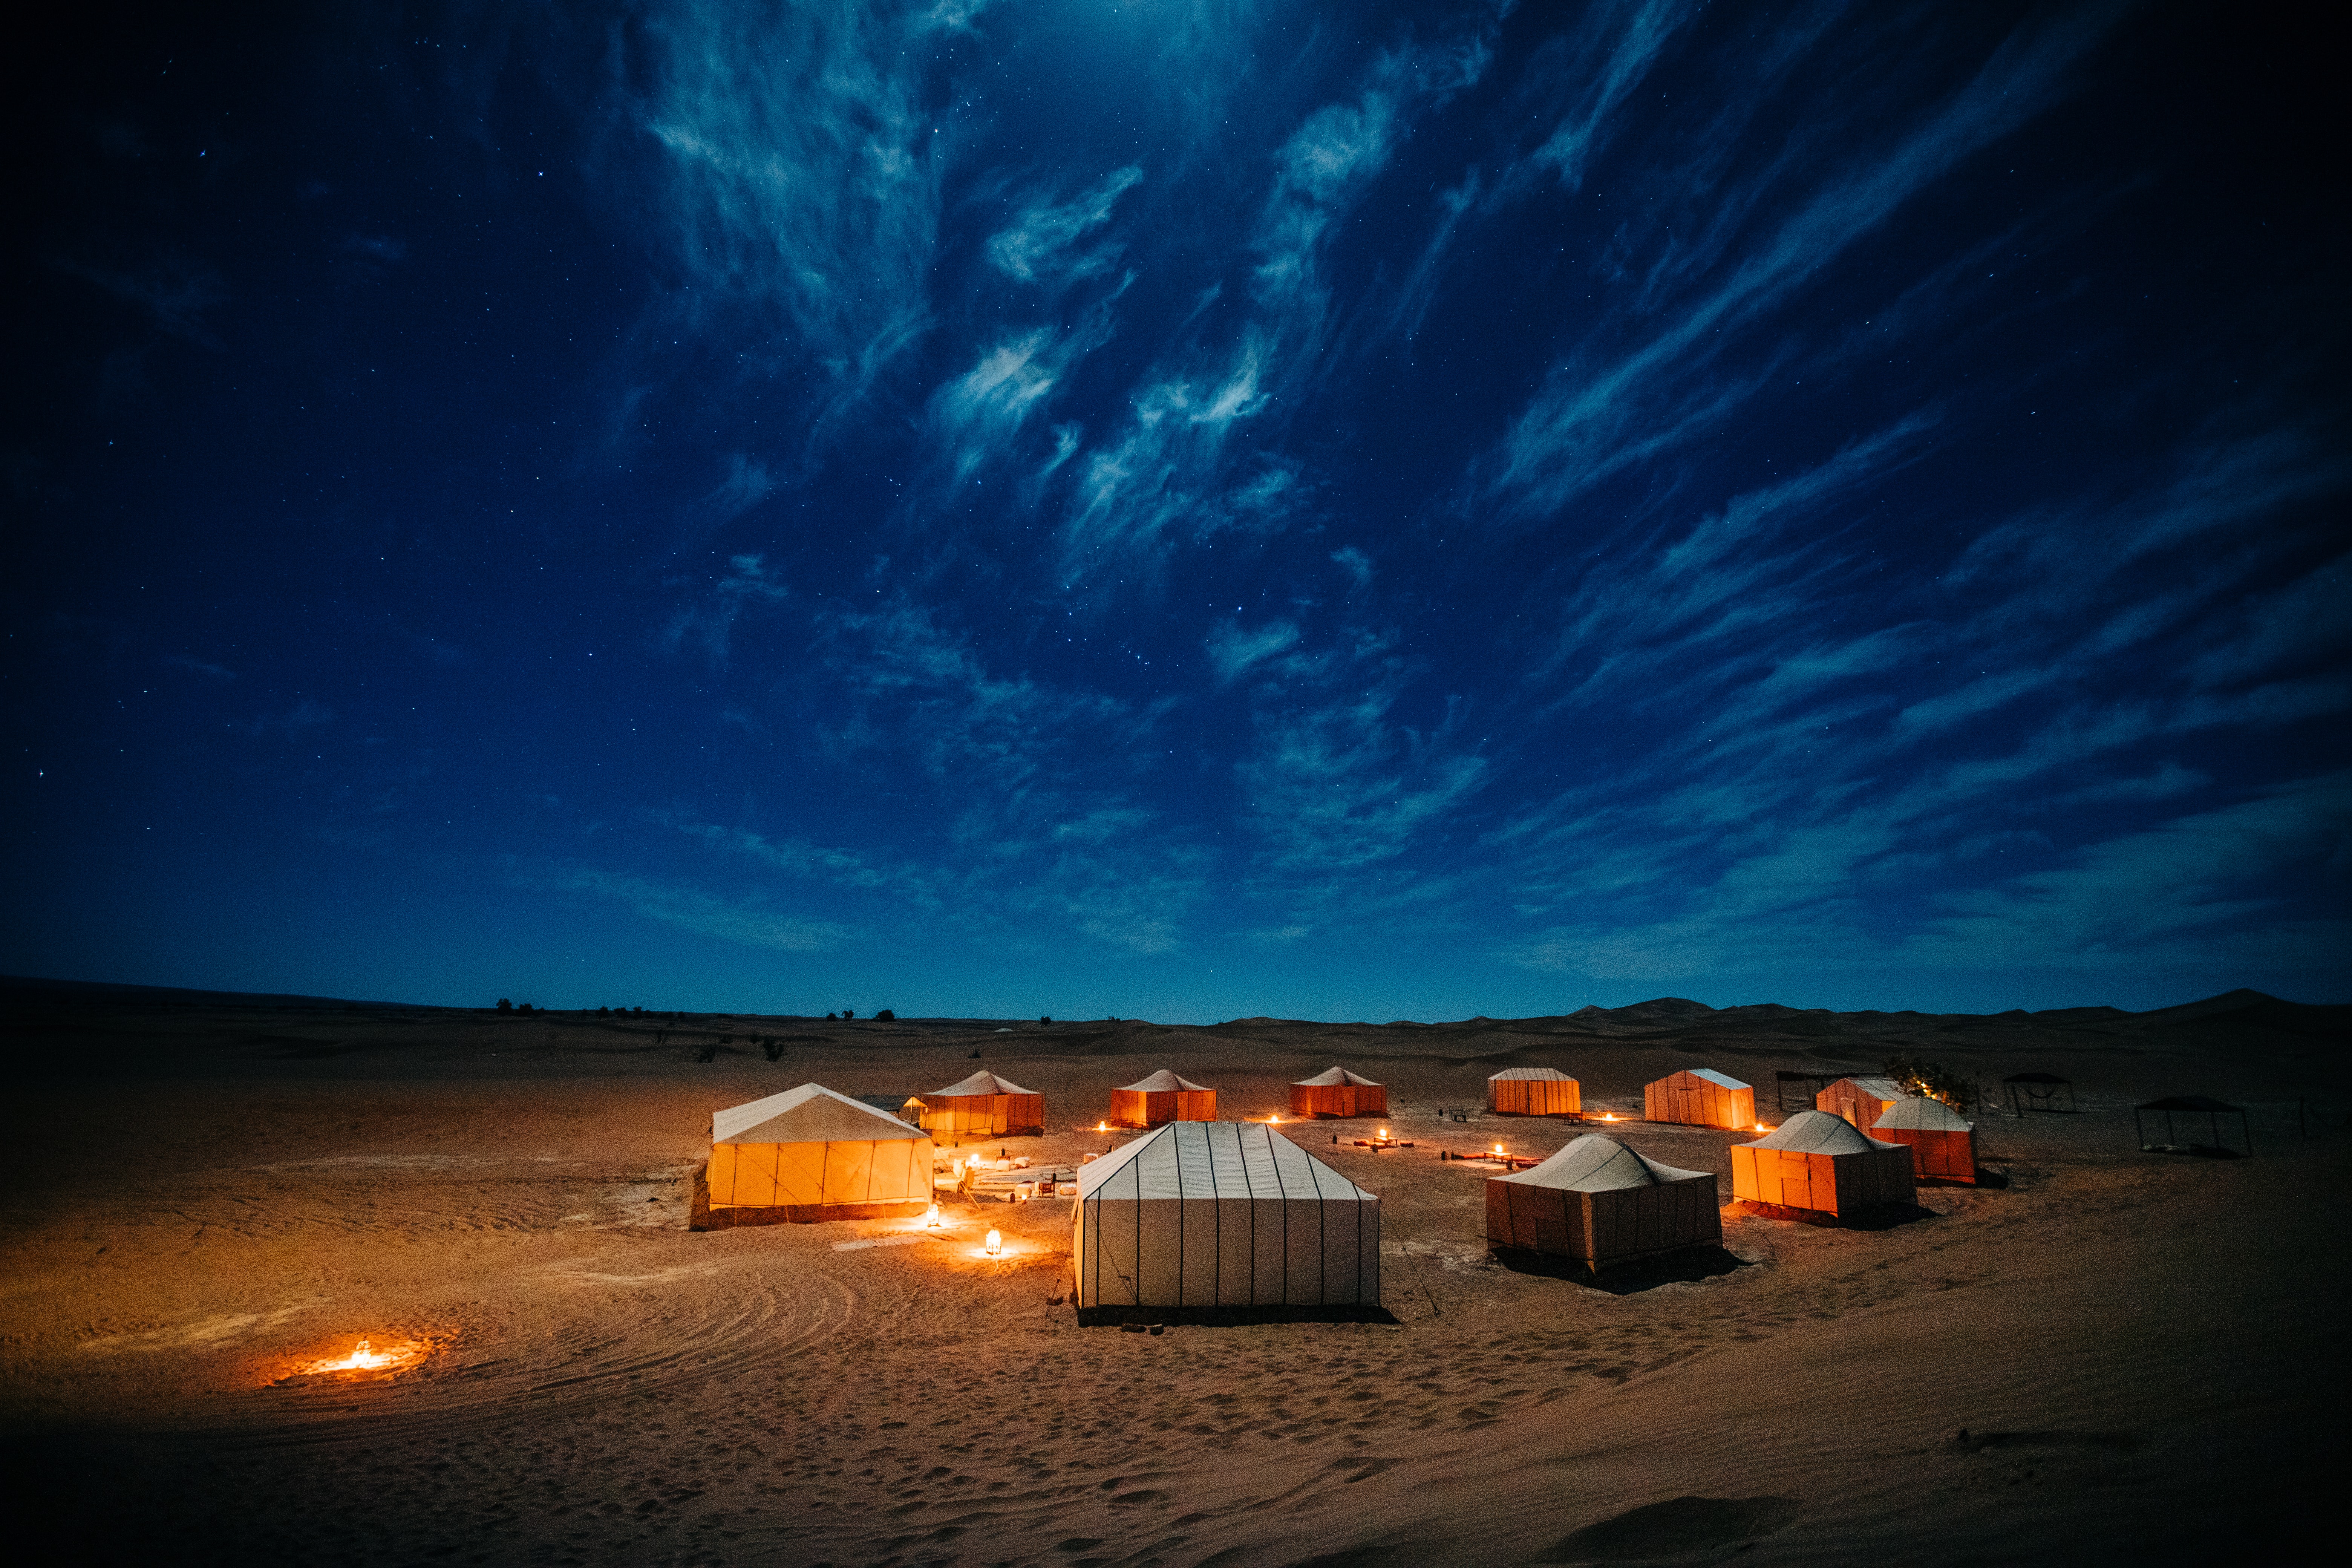 A illuminated campground under night skies